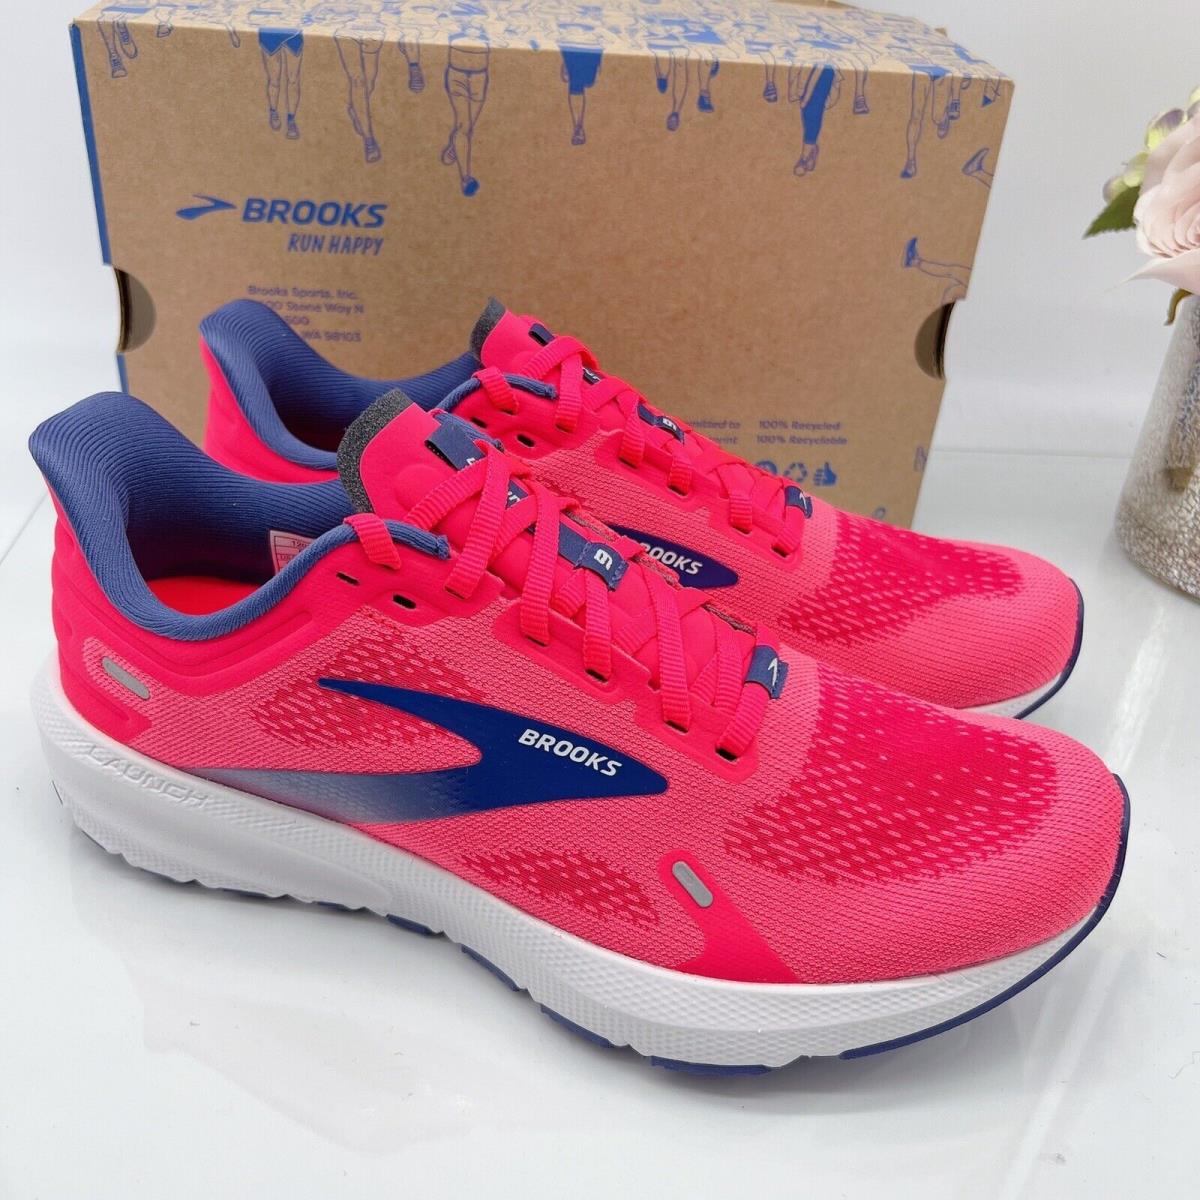 Brooks Launch 9 Road Running Shoe Pink/fuchsia/cobalt Womens US 8 Limited